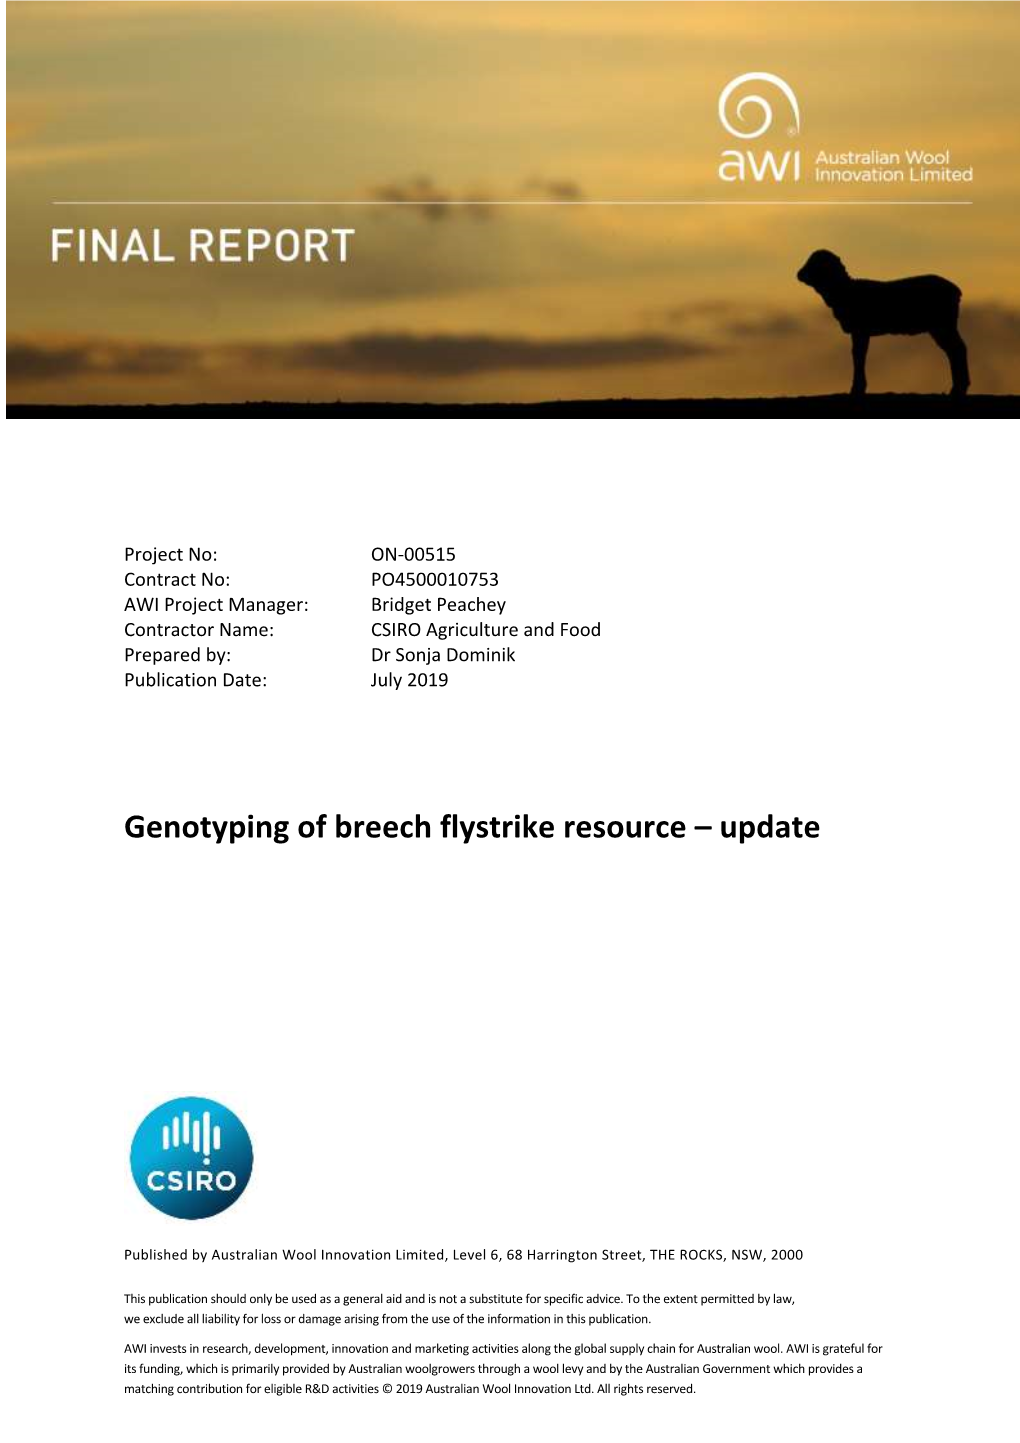 Genotyping of Breech Flystrike Resource – Update